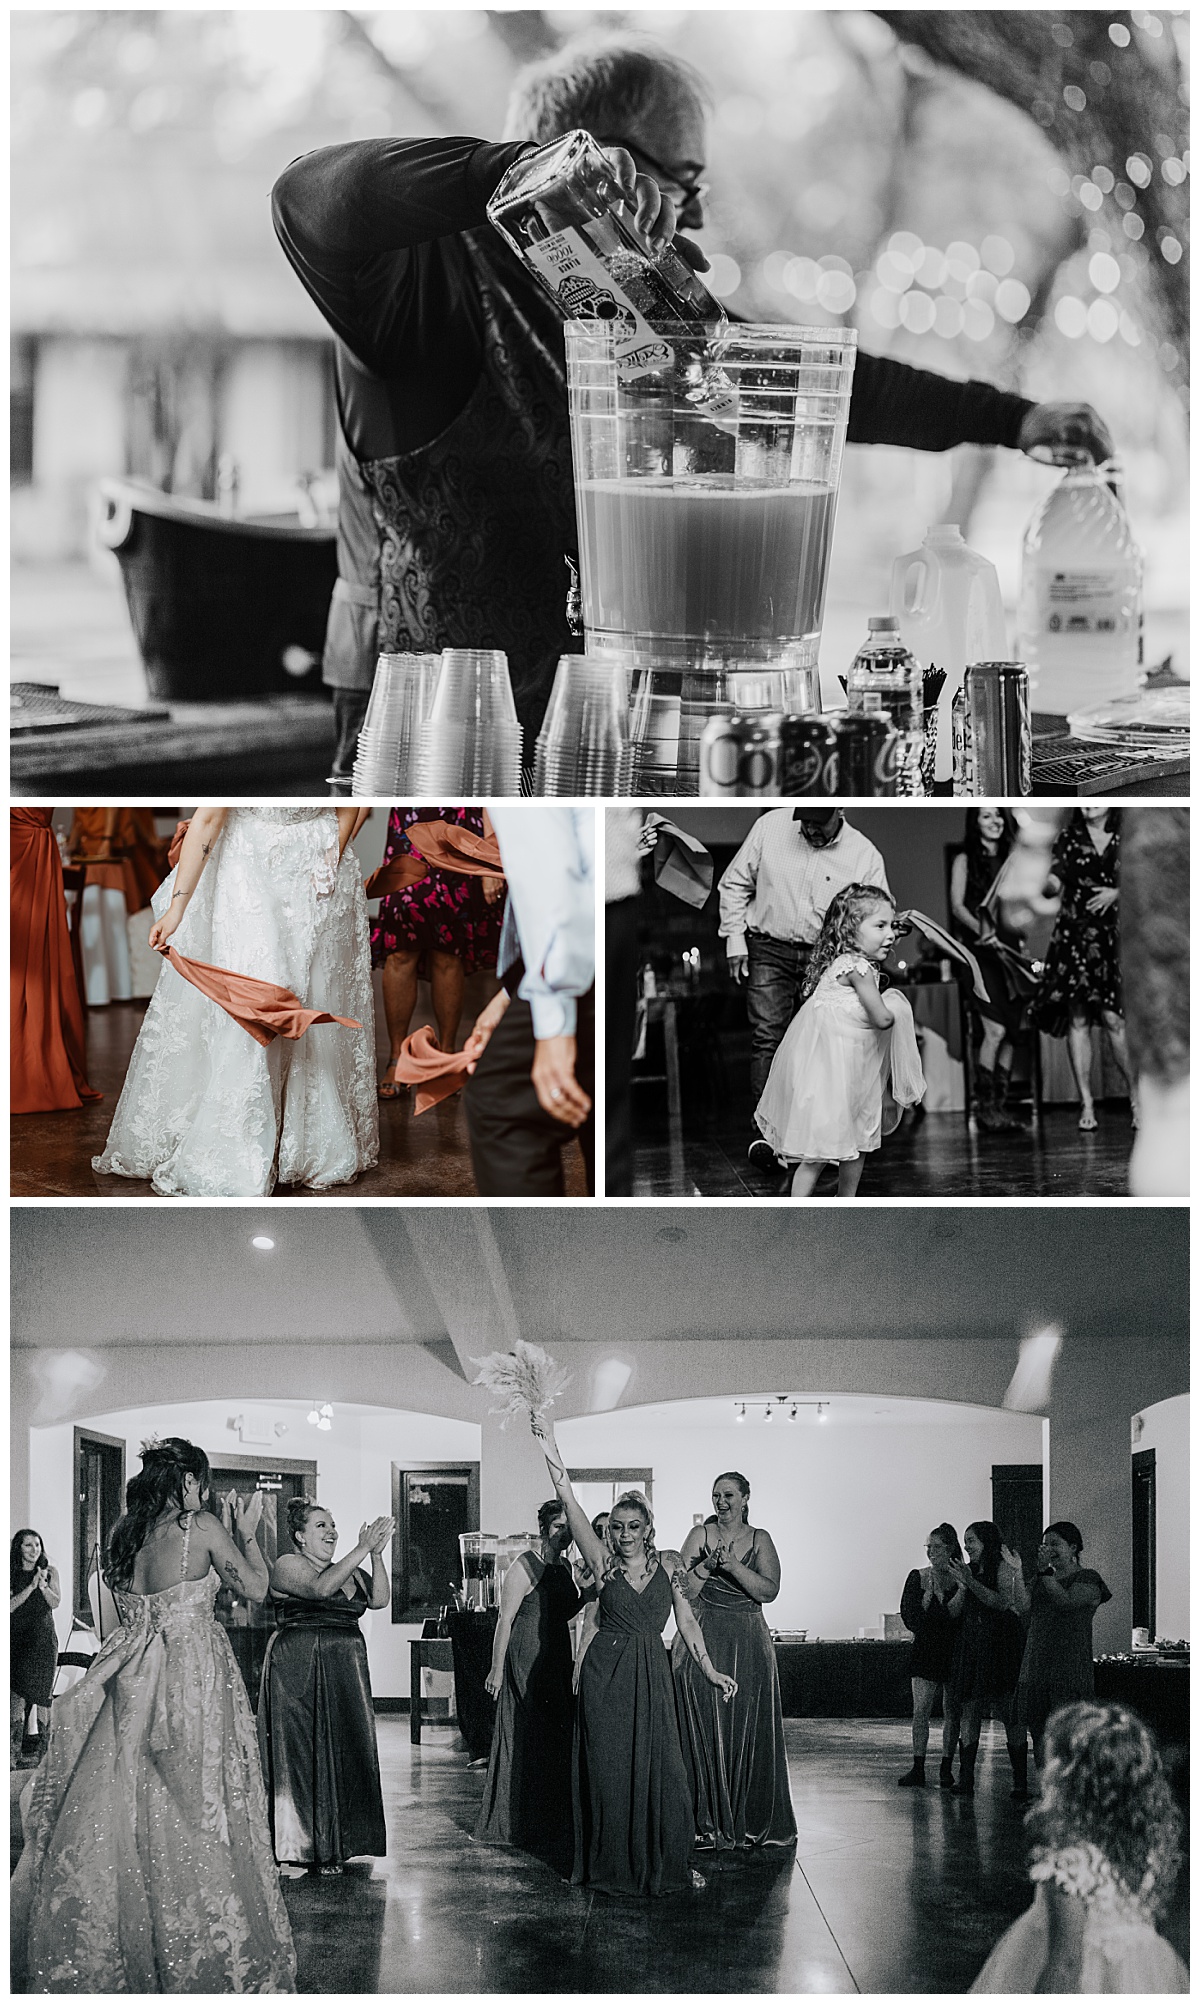 Guests enjoy reception by Austin wedding photographer